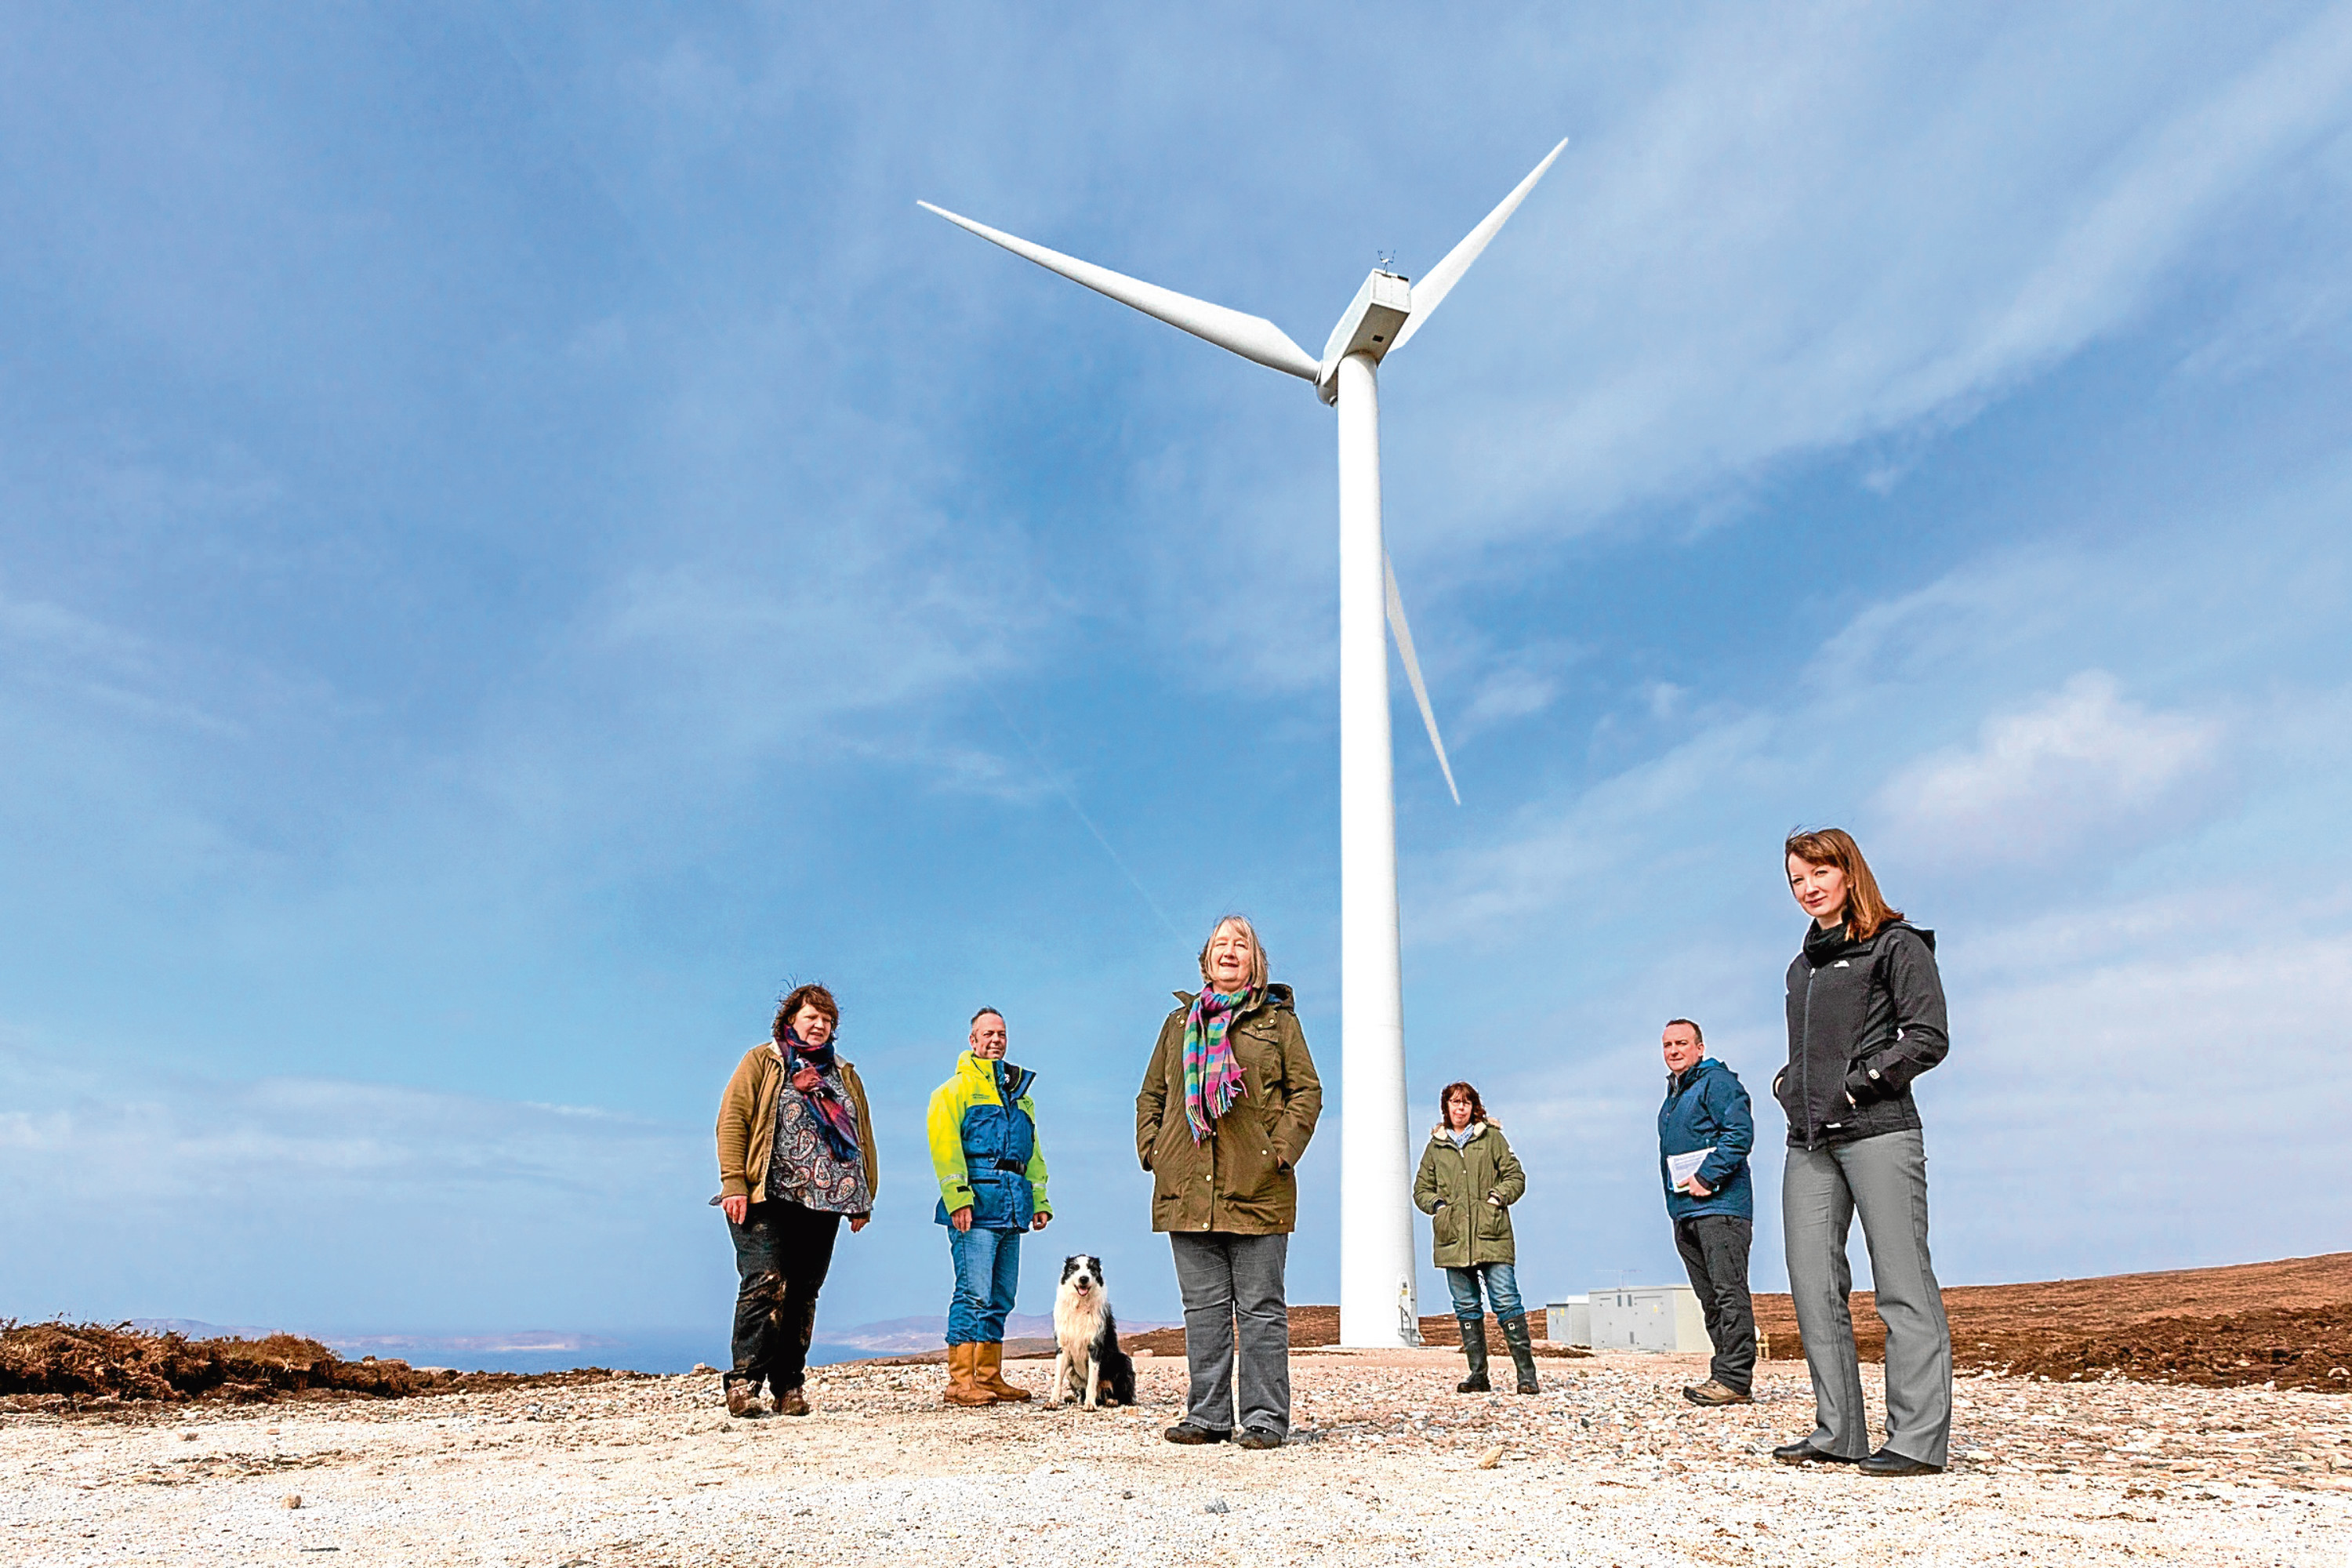 Coigach Community CIC (community interest company) raised £1.75 million for its wind turbine project.